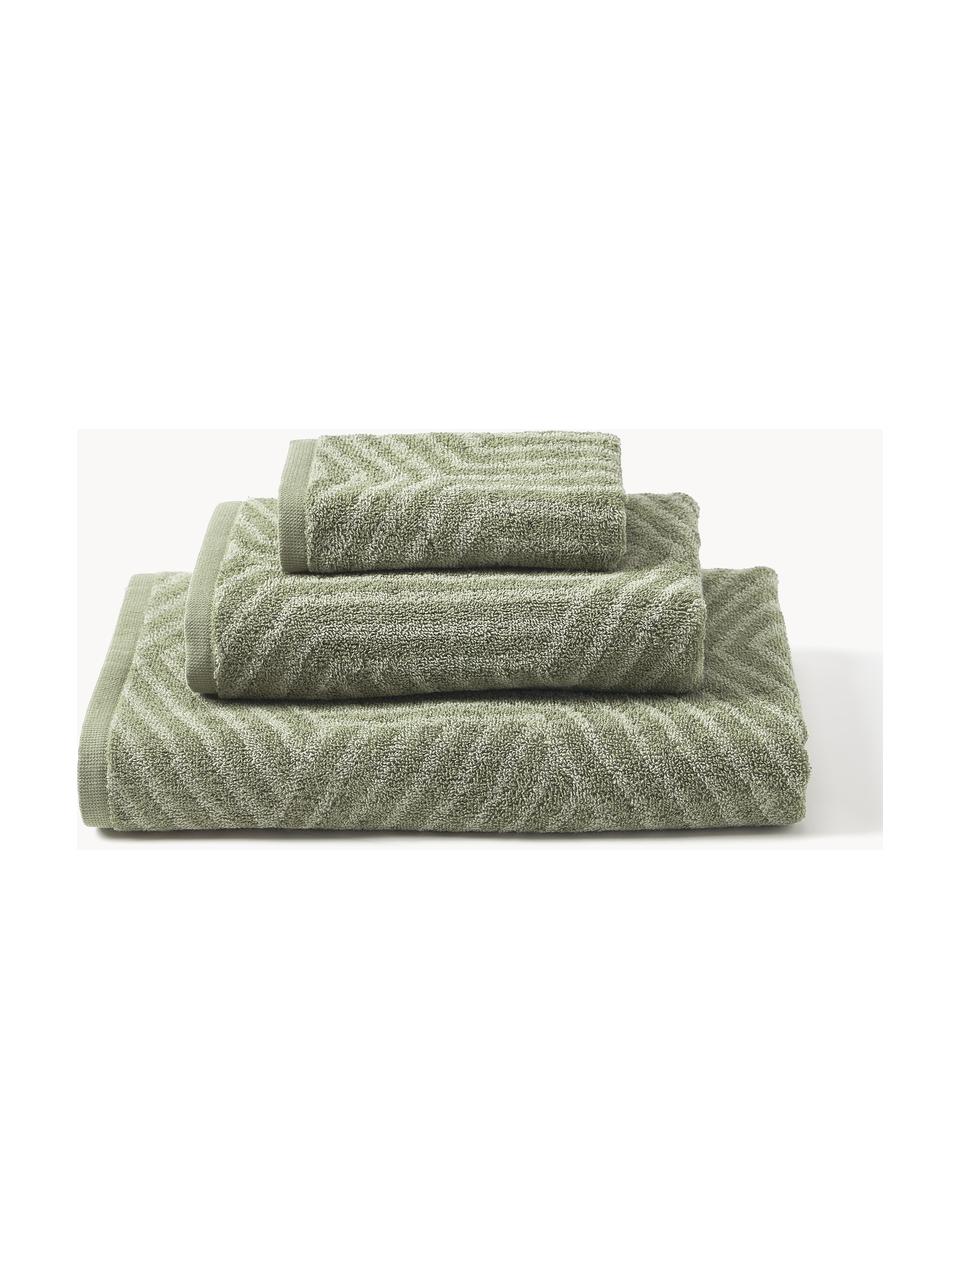 Set de toallas Fatu, tamaños diferentes, Tonos de verde oliva, Set de 3 (toalla tocador, toalla lavabo y toalla ducha)